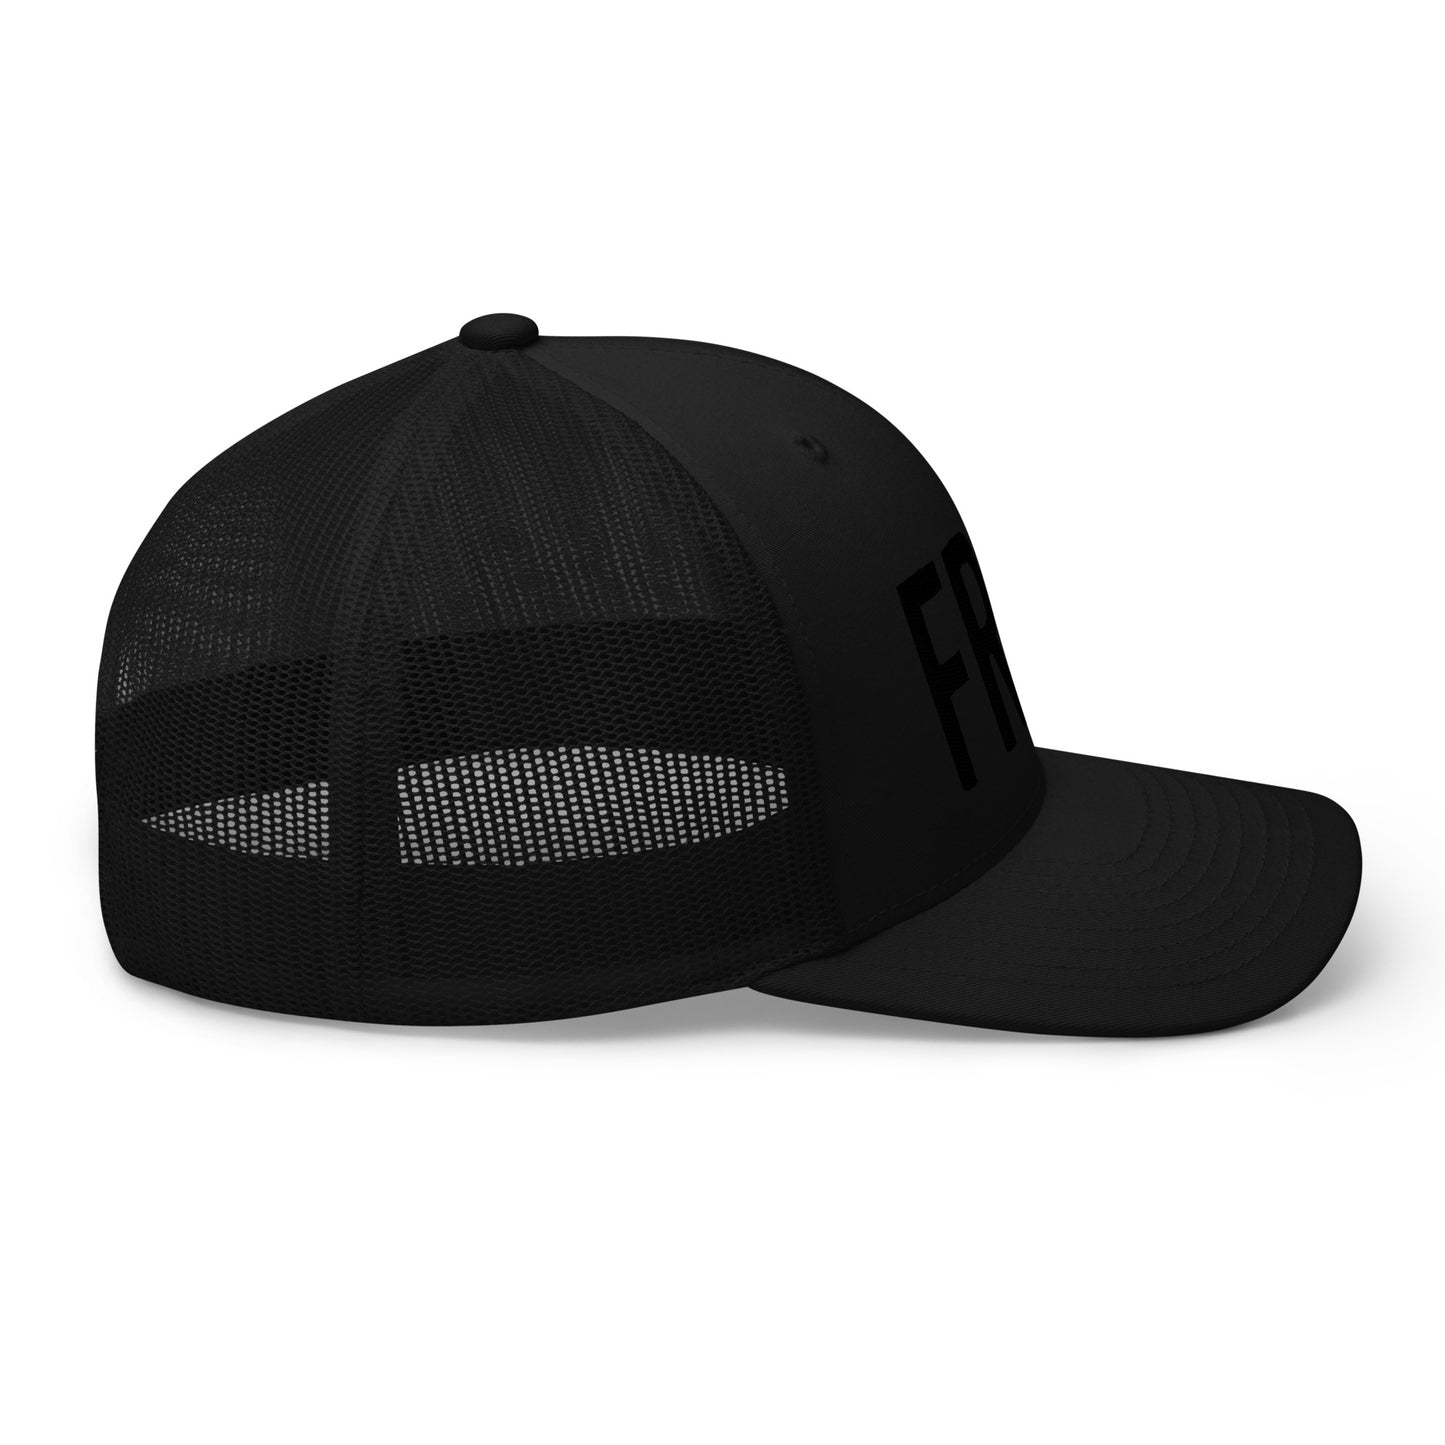 FREE - Freestyle Trucker Hat (b)